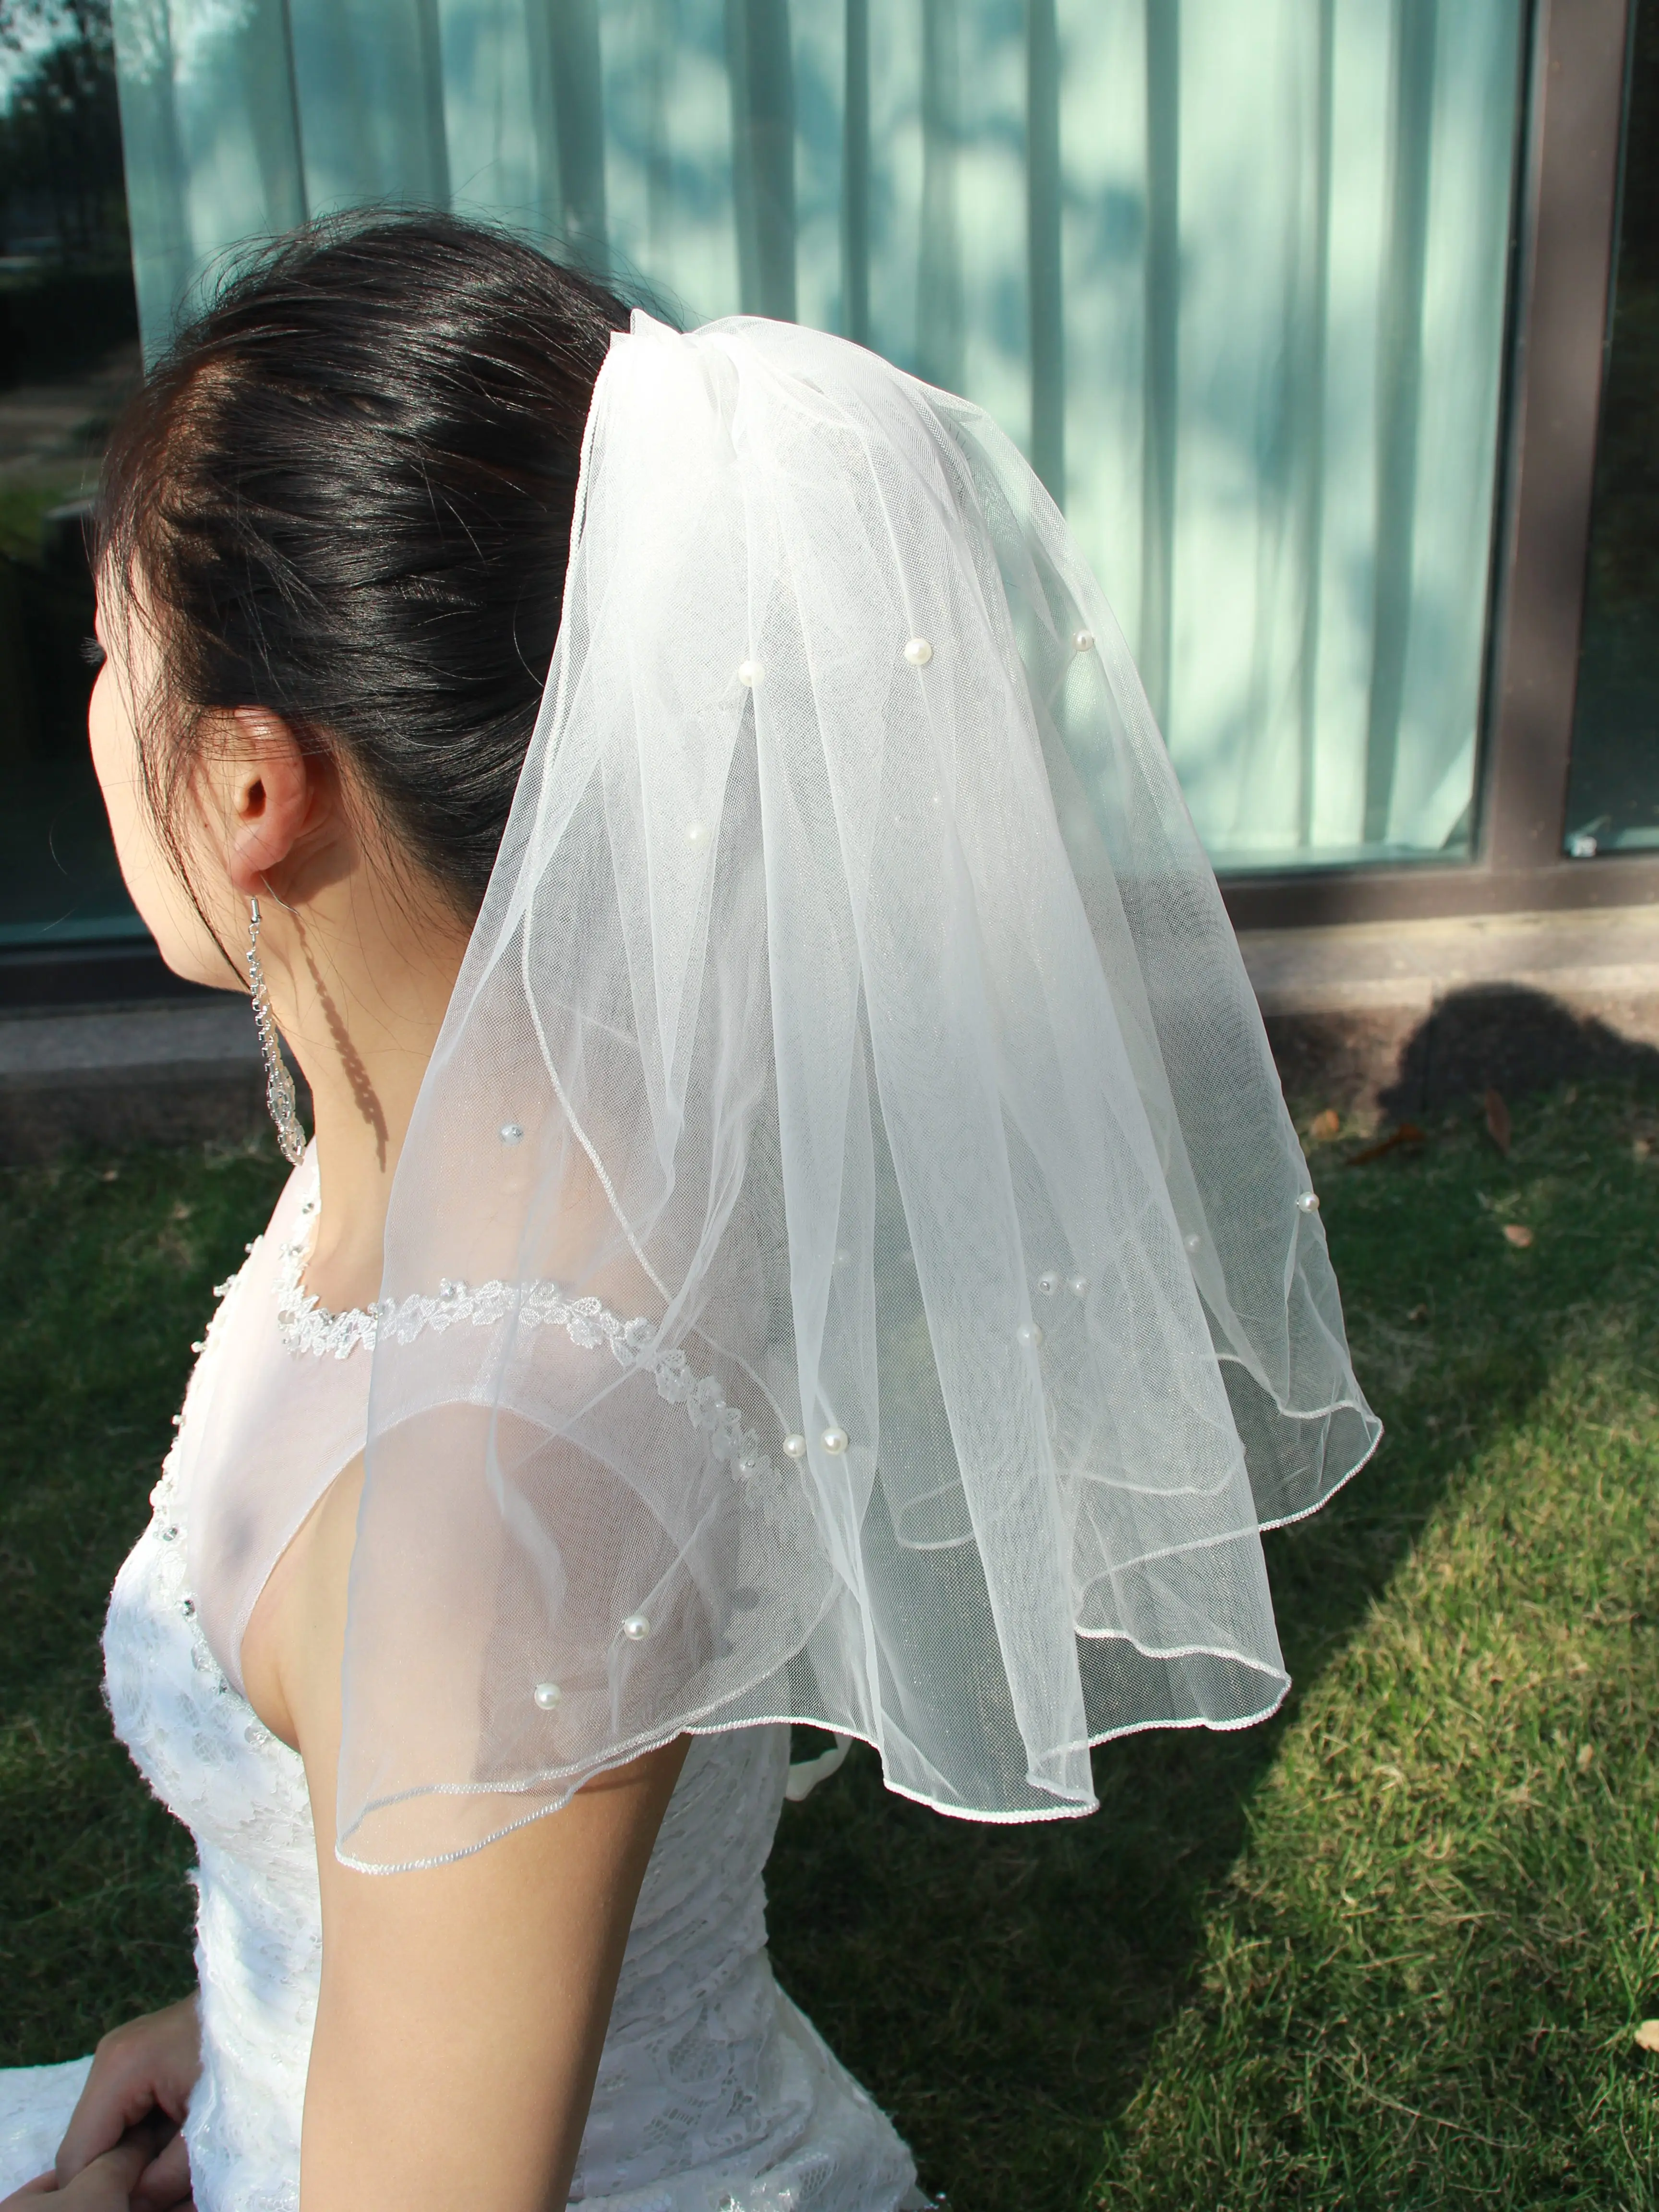 Short Wedding Veils 1 Tier Pencil Edge Bridal Veil Pearls Beaded